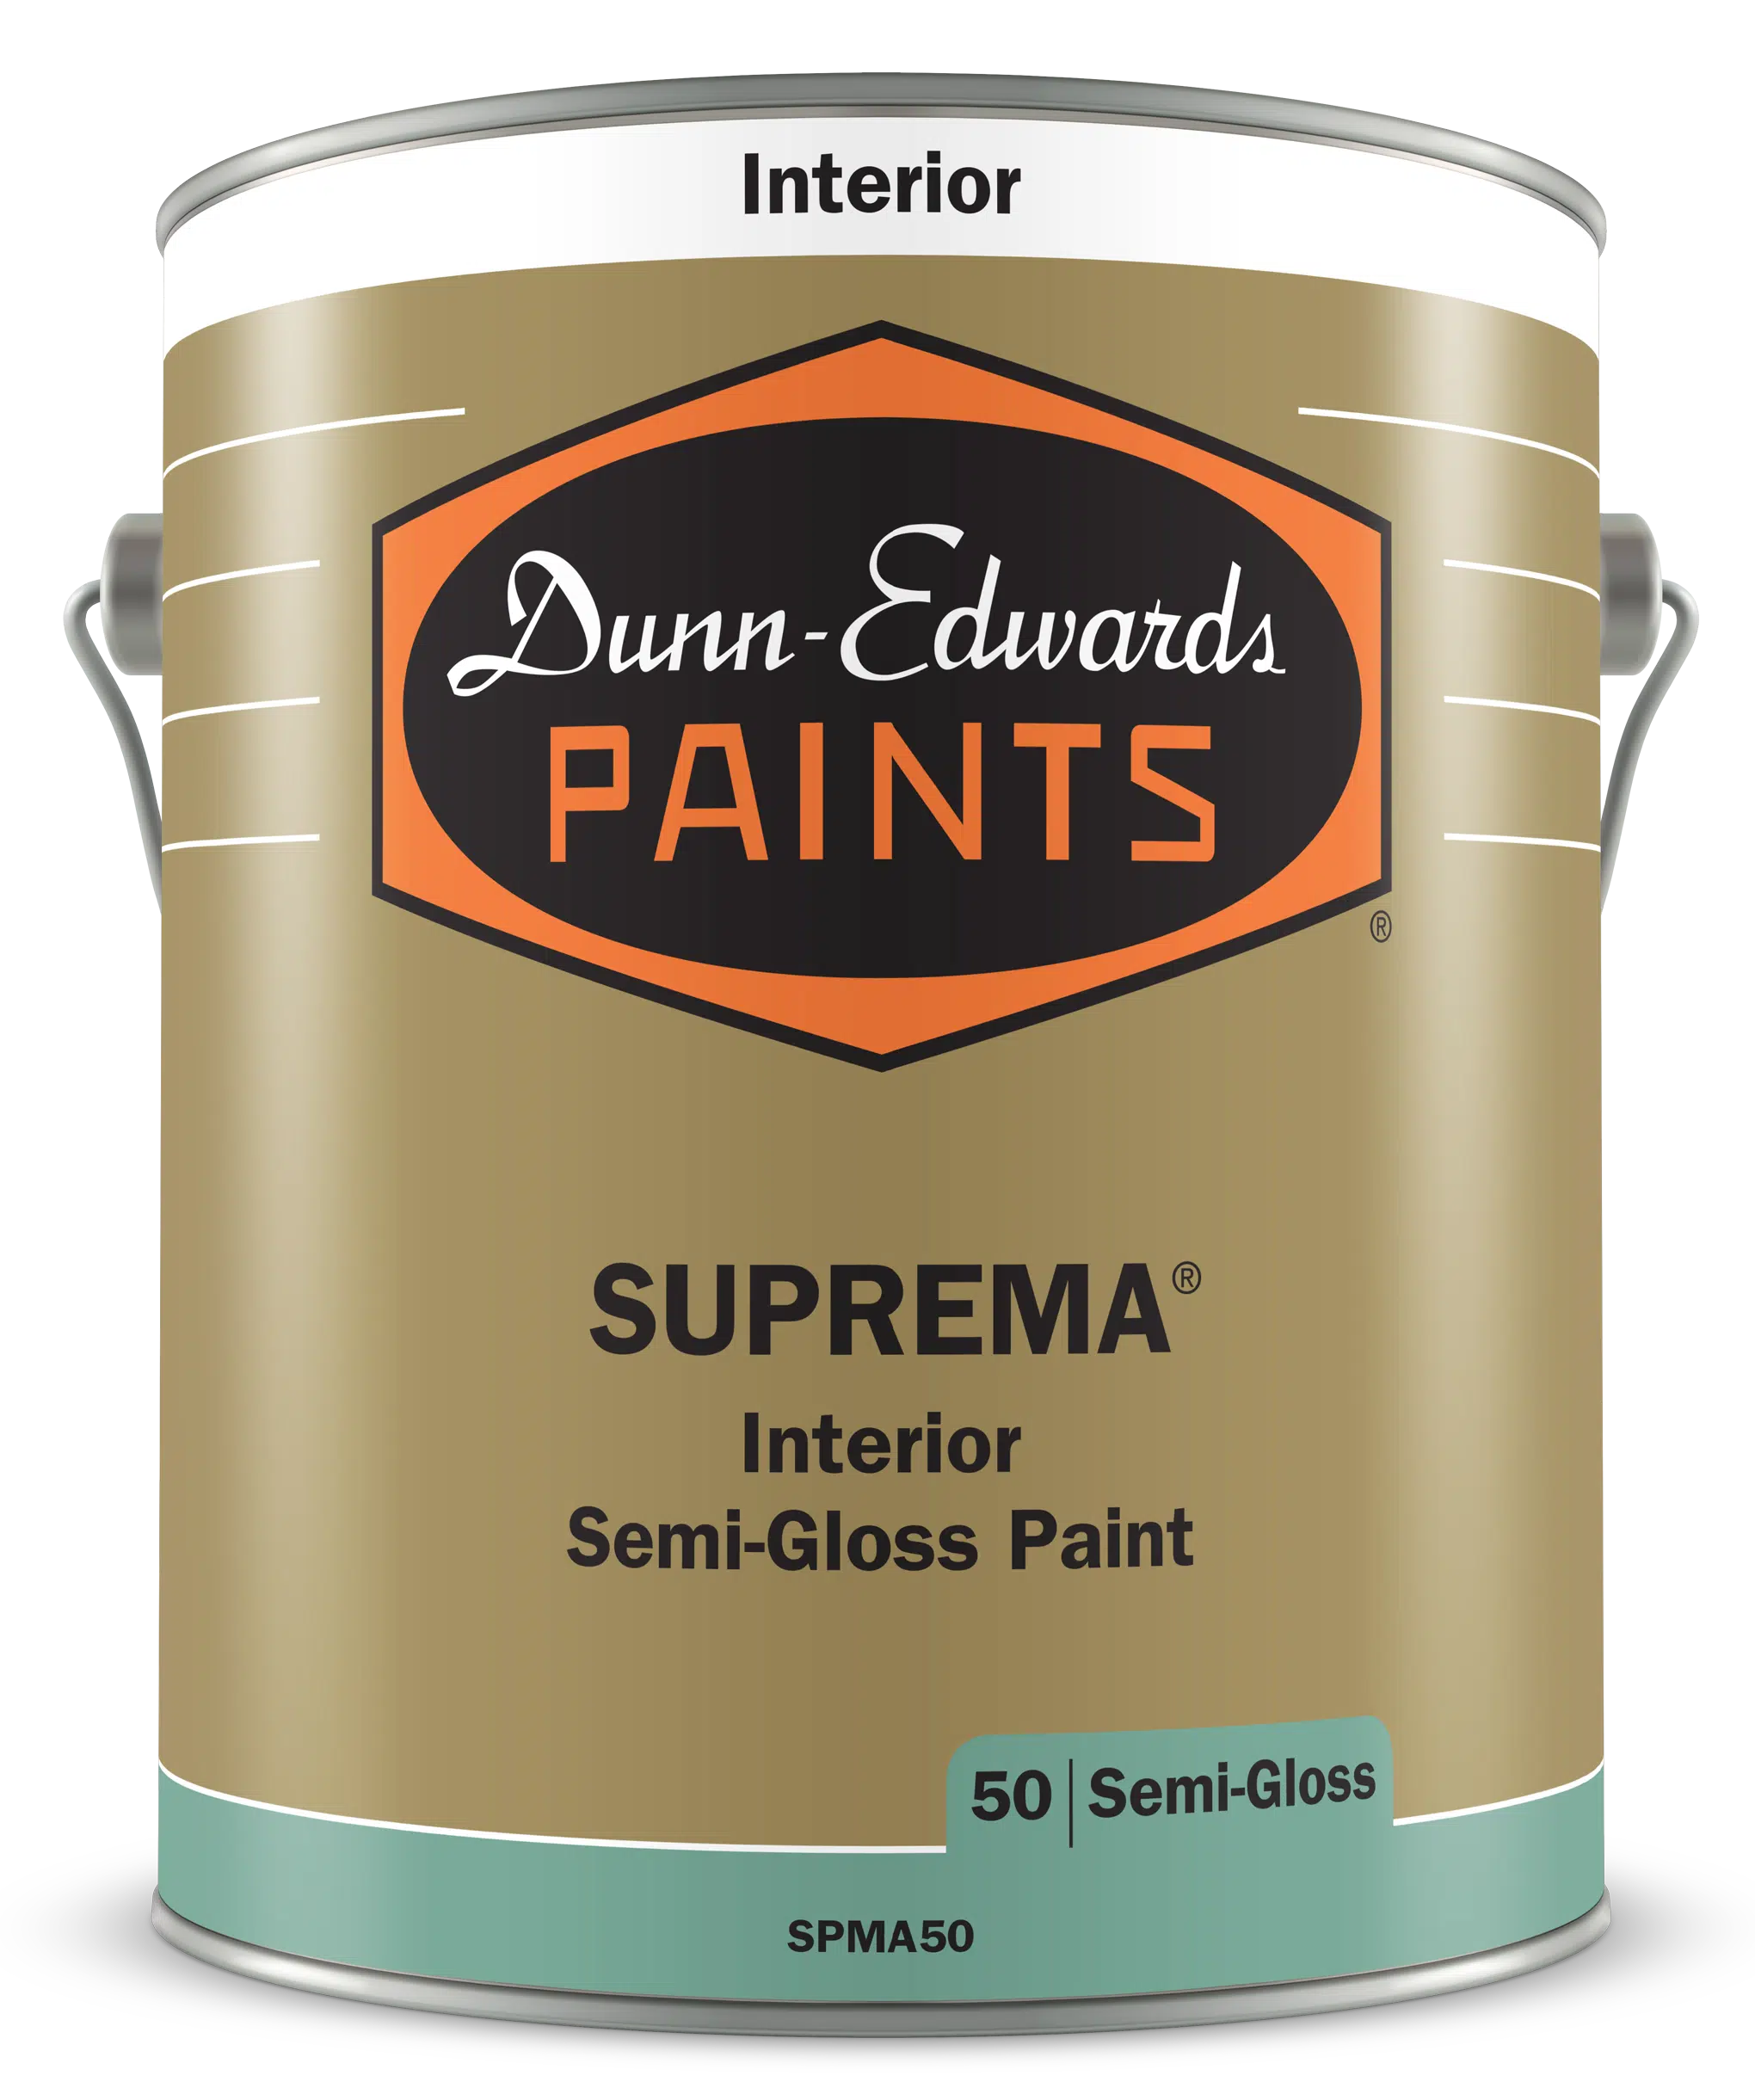 SUPREMA Interior Semi-Gloss Paint Can